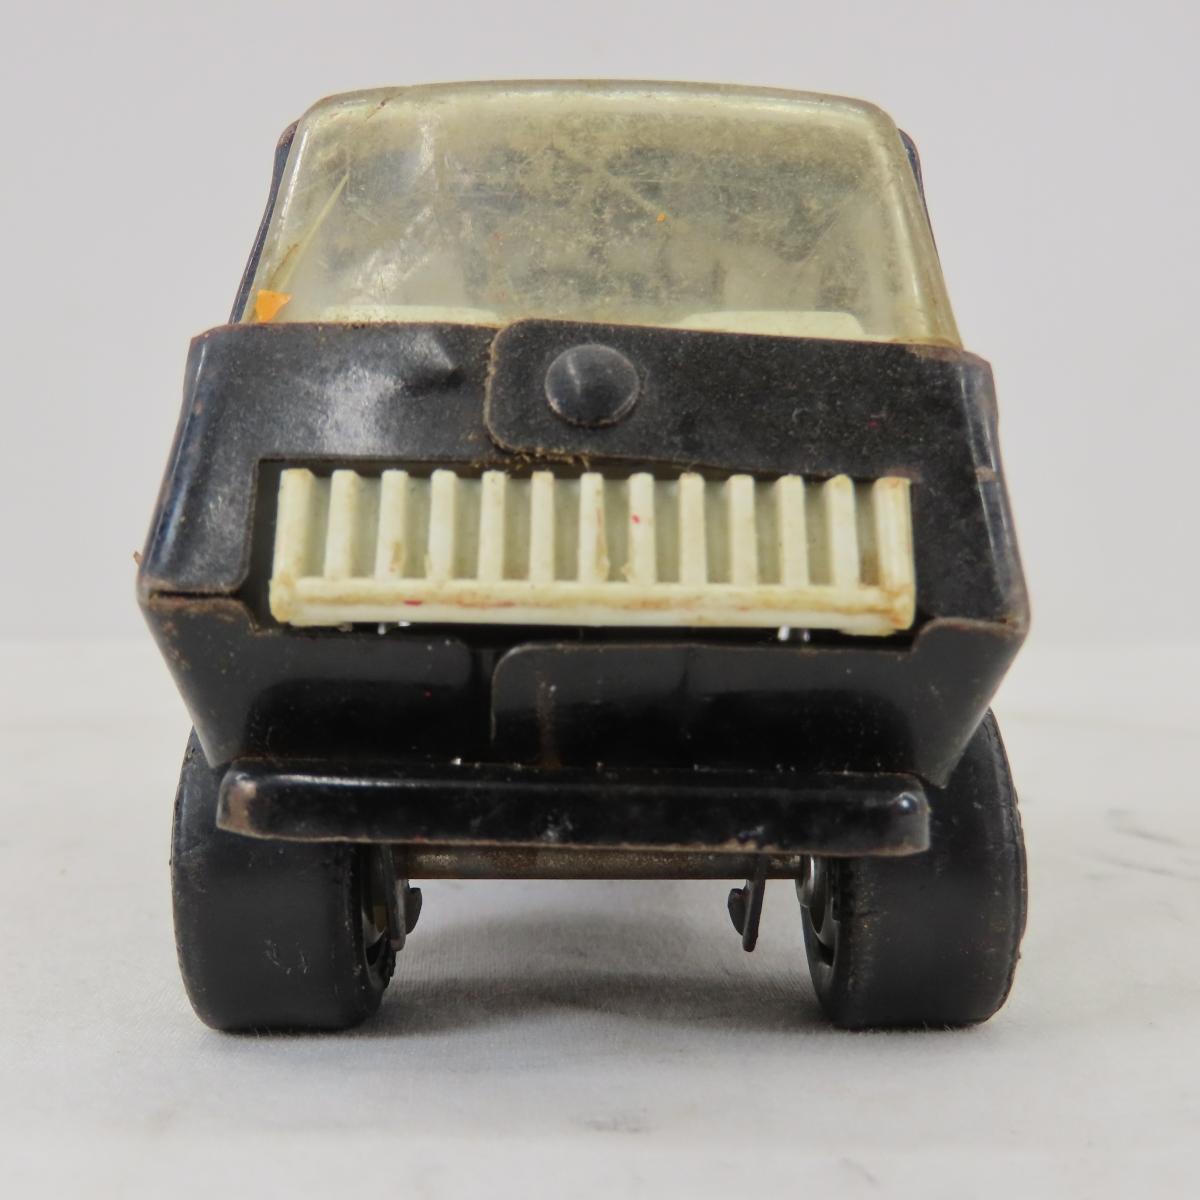 Vintage Tonka Metal & Plastic Vans & Vehicles